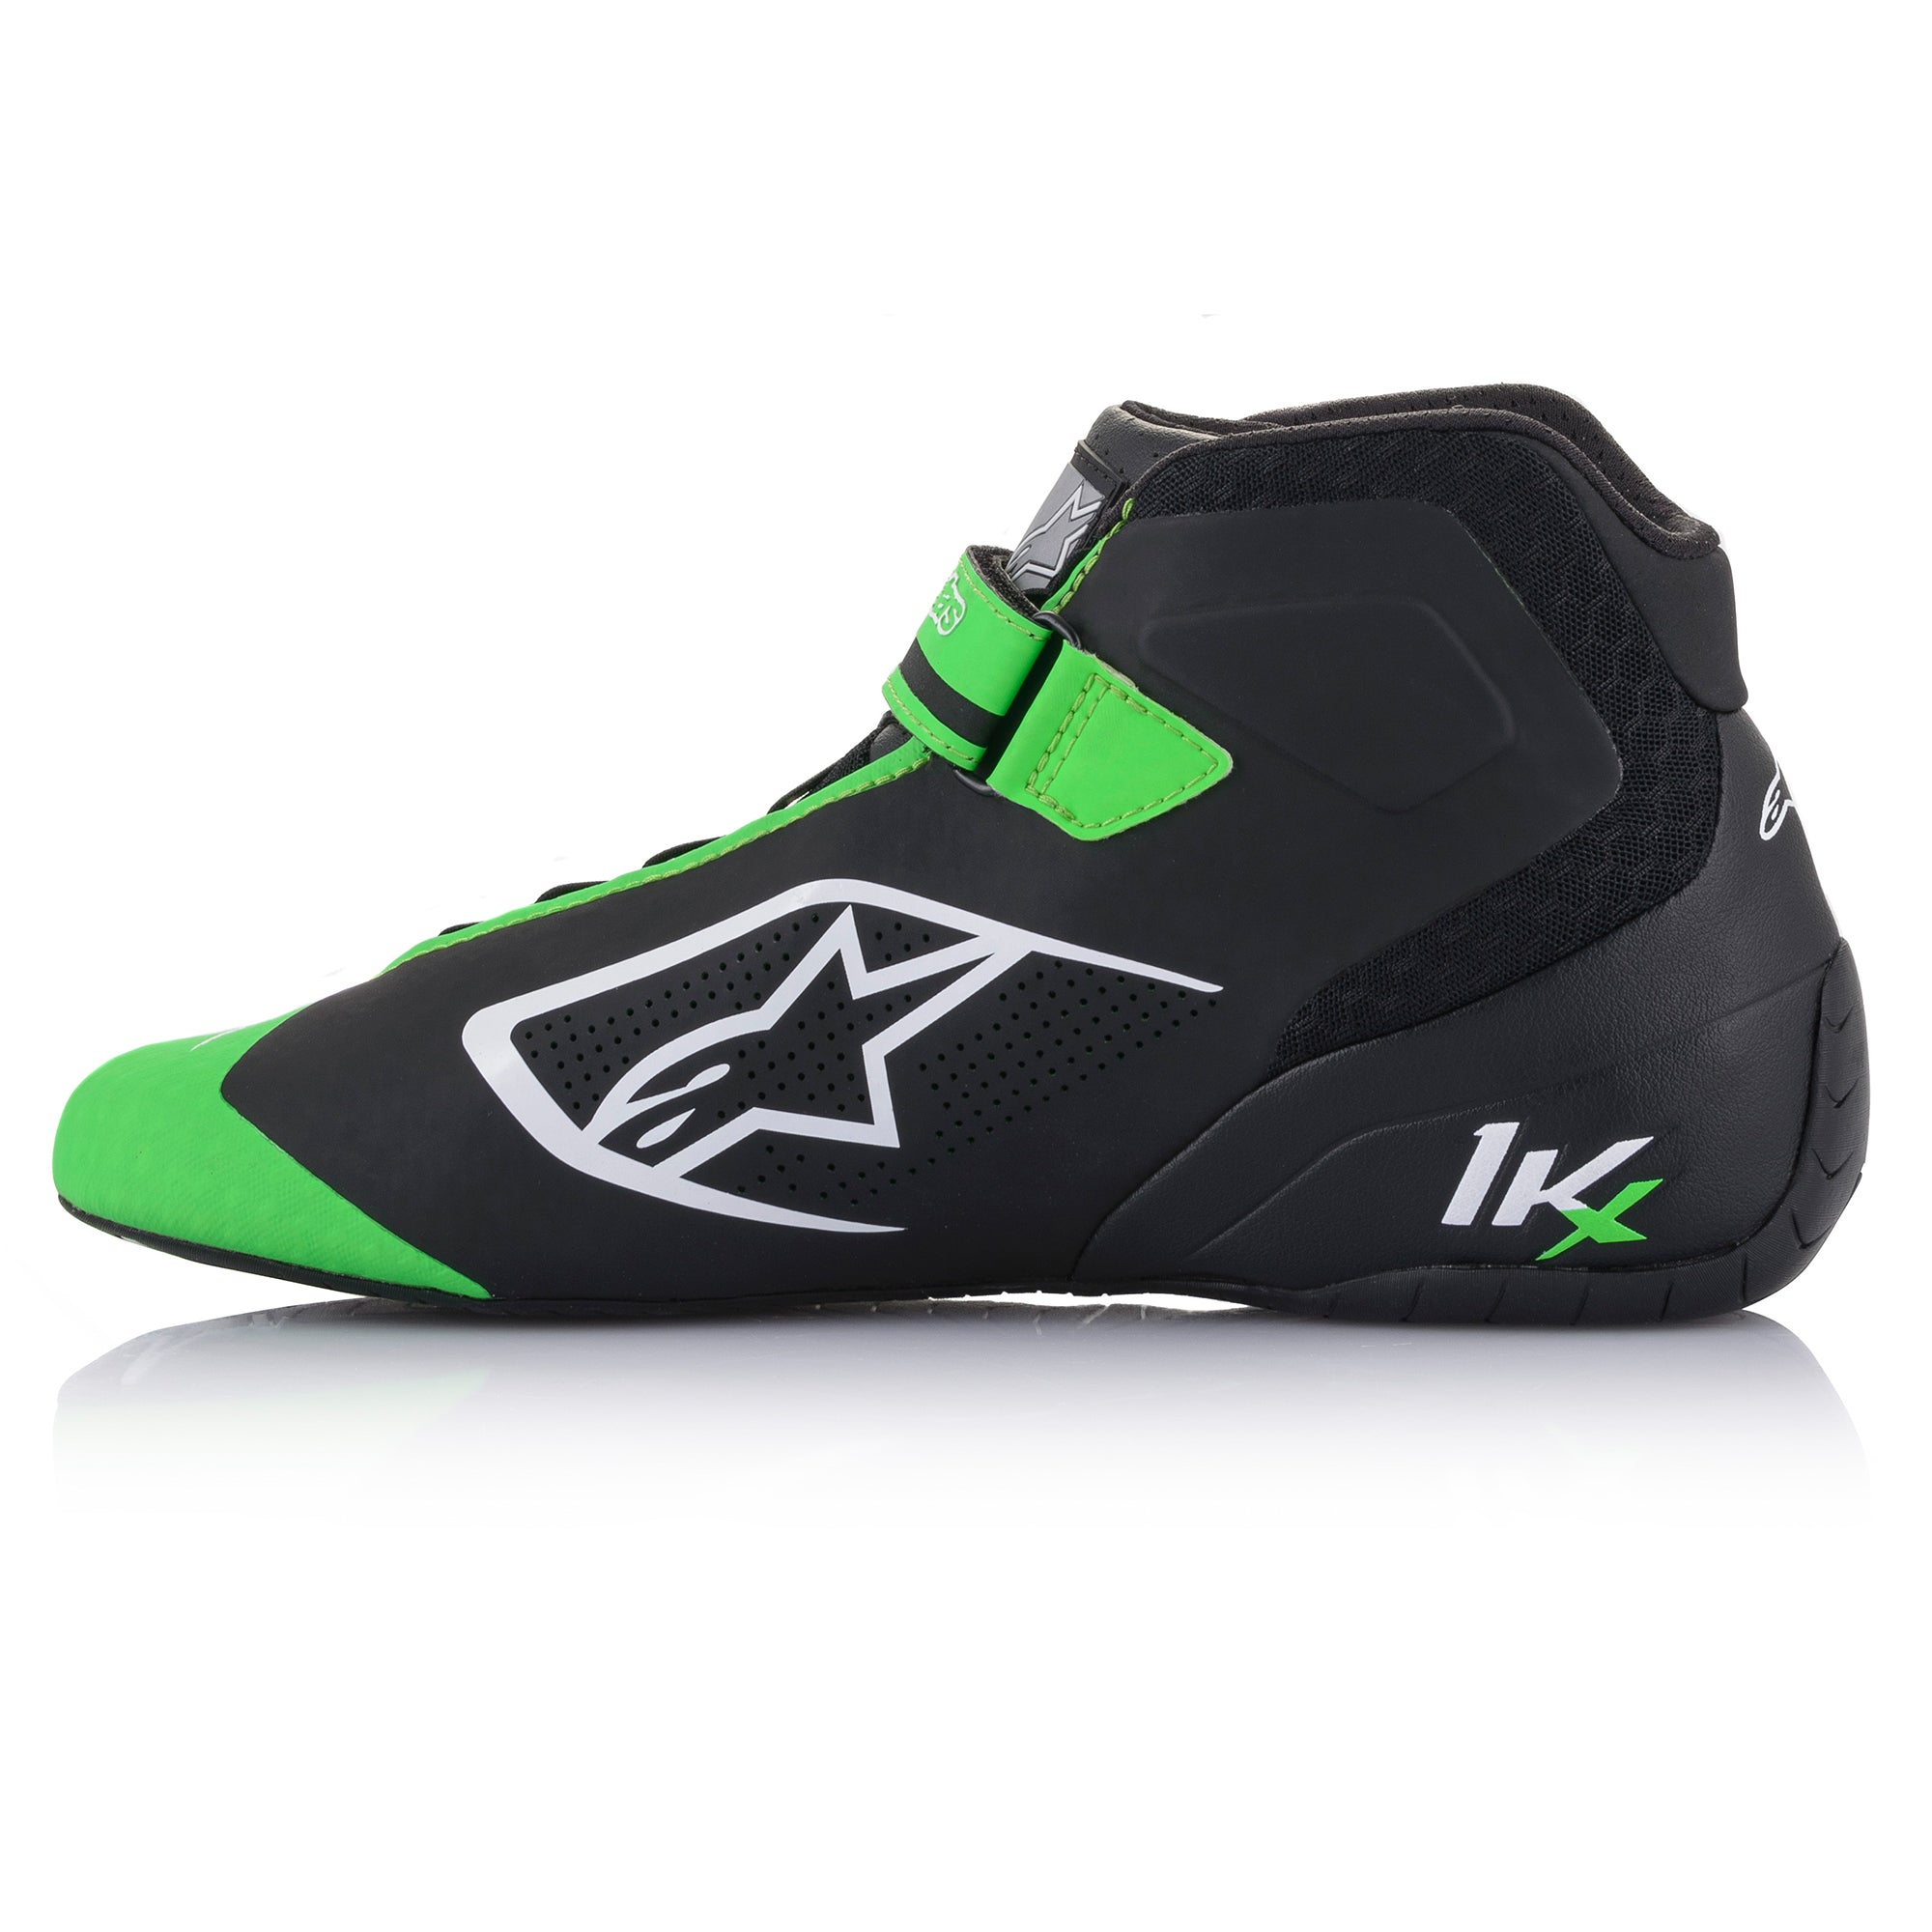 Tech-1 KX Shoes